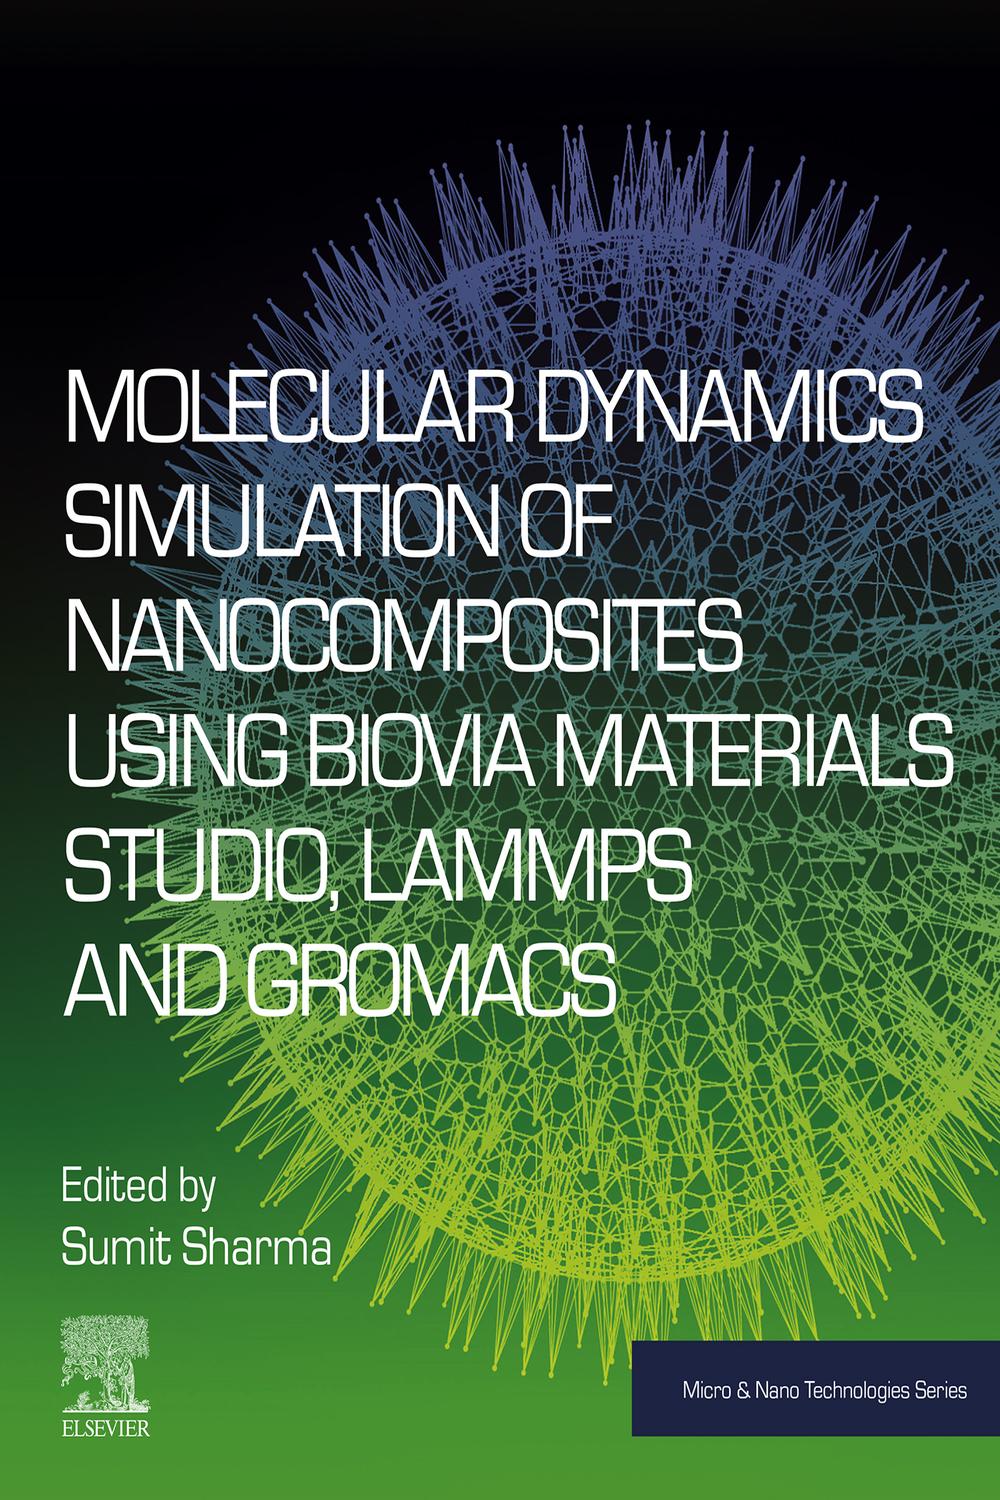 Molecular Dynamics Simulation of Nanocomposites using BIOVIA Materials Studio, Lammps and Gromacs - Sumit Sharma